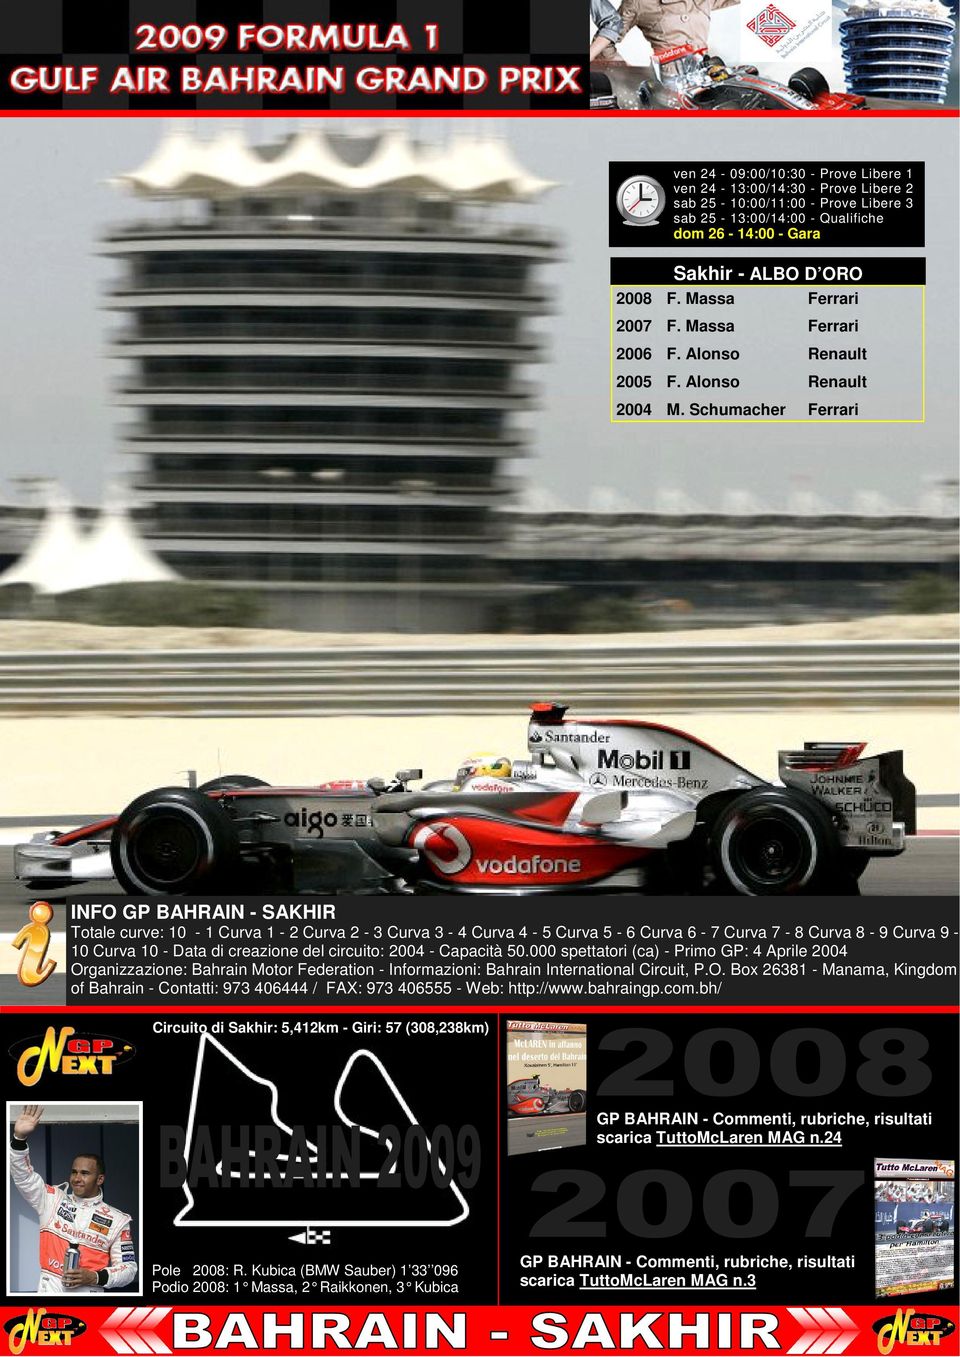 Schumacher Ferrari INFO GP BAHRAIN - SAKHIR Totale curve: 10-1 Curva 1-2 Curva 2-3 Curva 3-4 Curva 4-5 Curva 5-6 Curva 6-7 Curva 7-8 Curva 8-9 Curva 9-10 Curva 10 - Data di creazione del circuito: